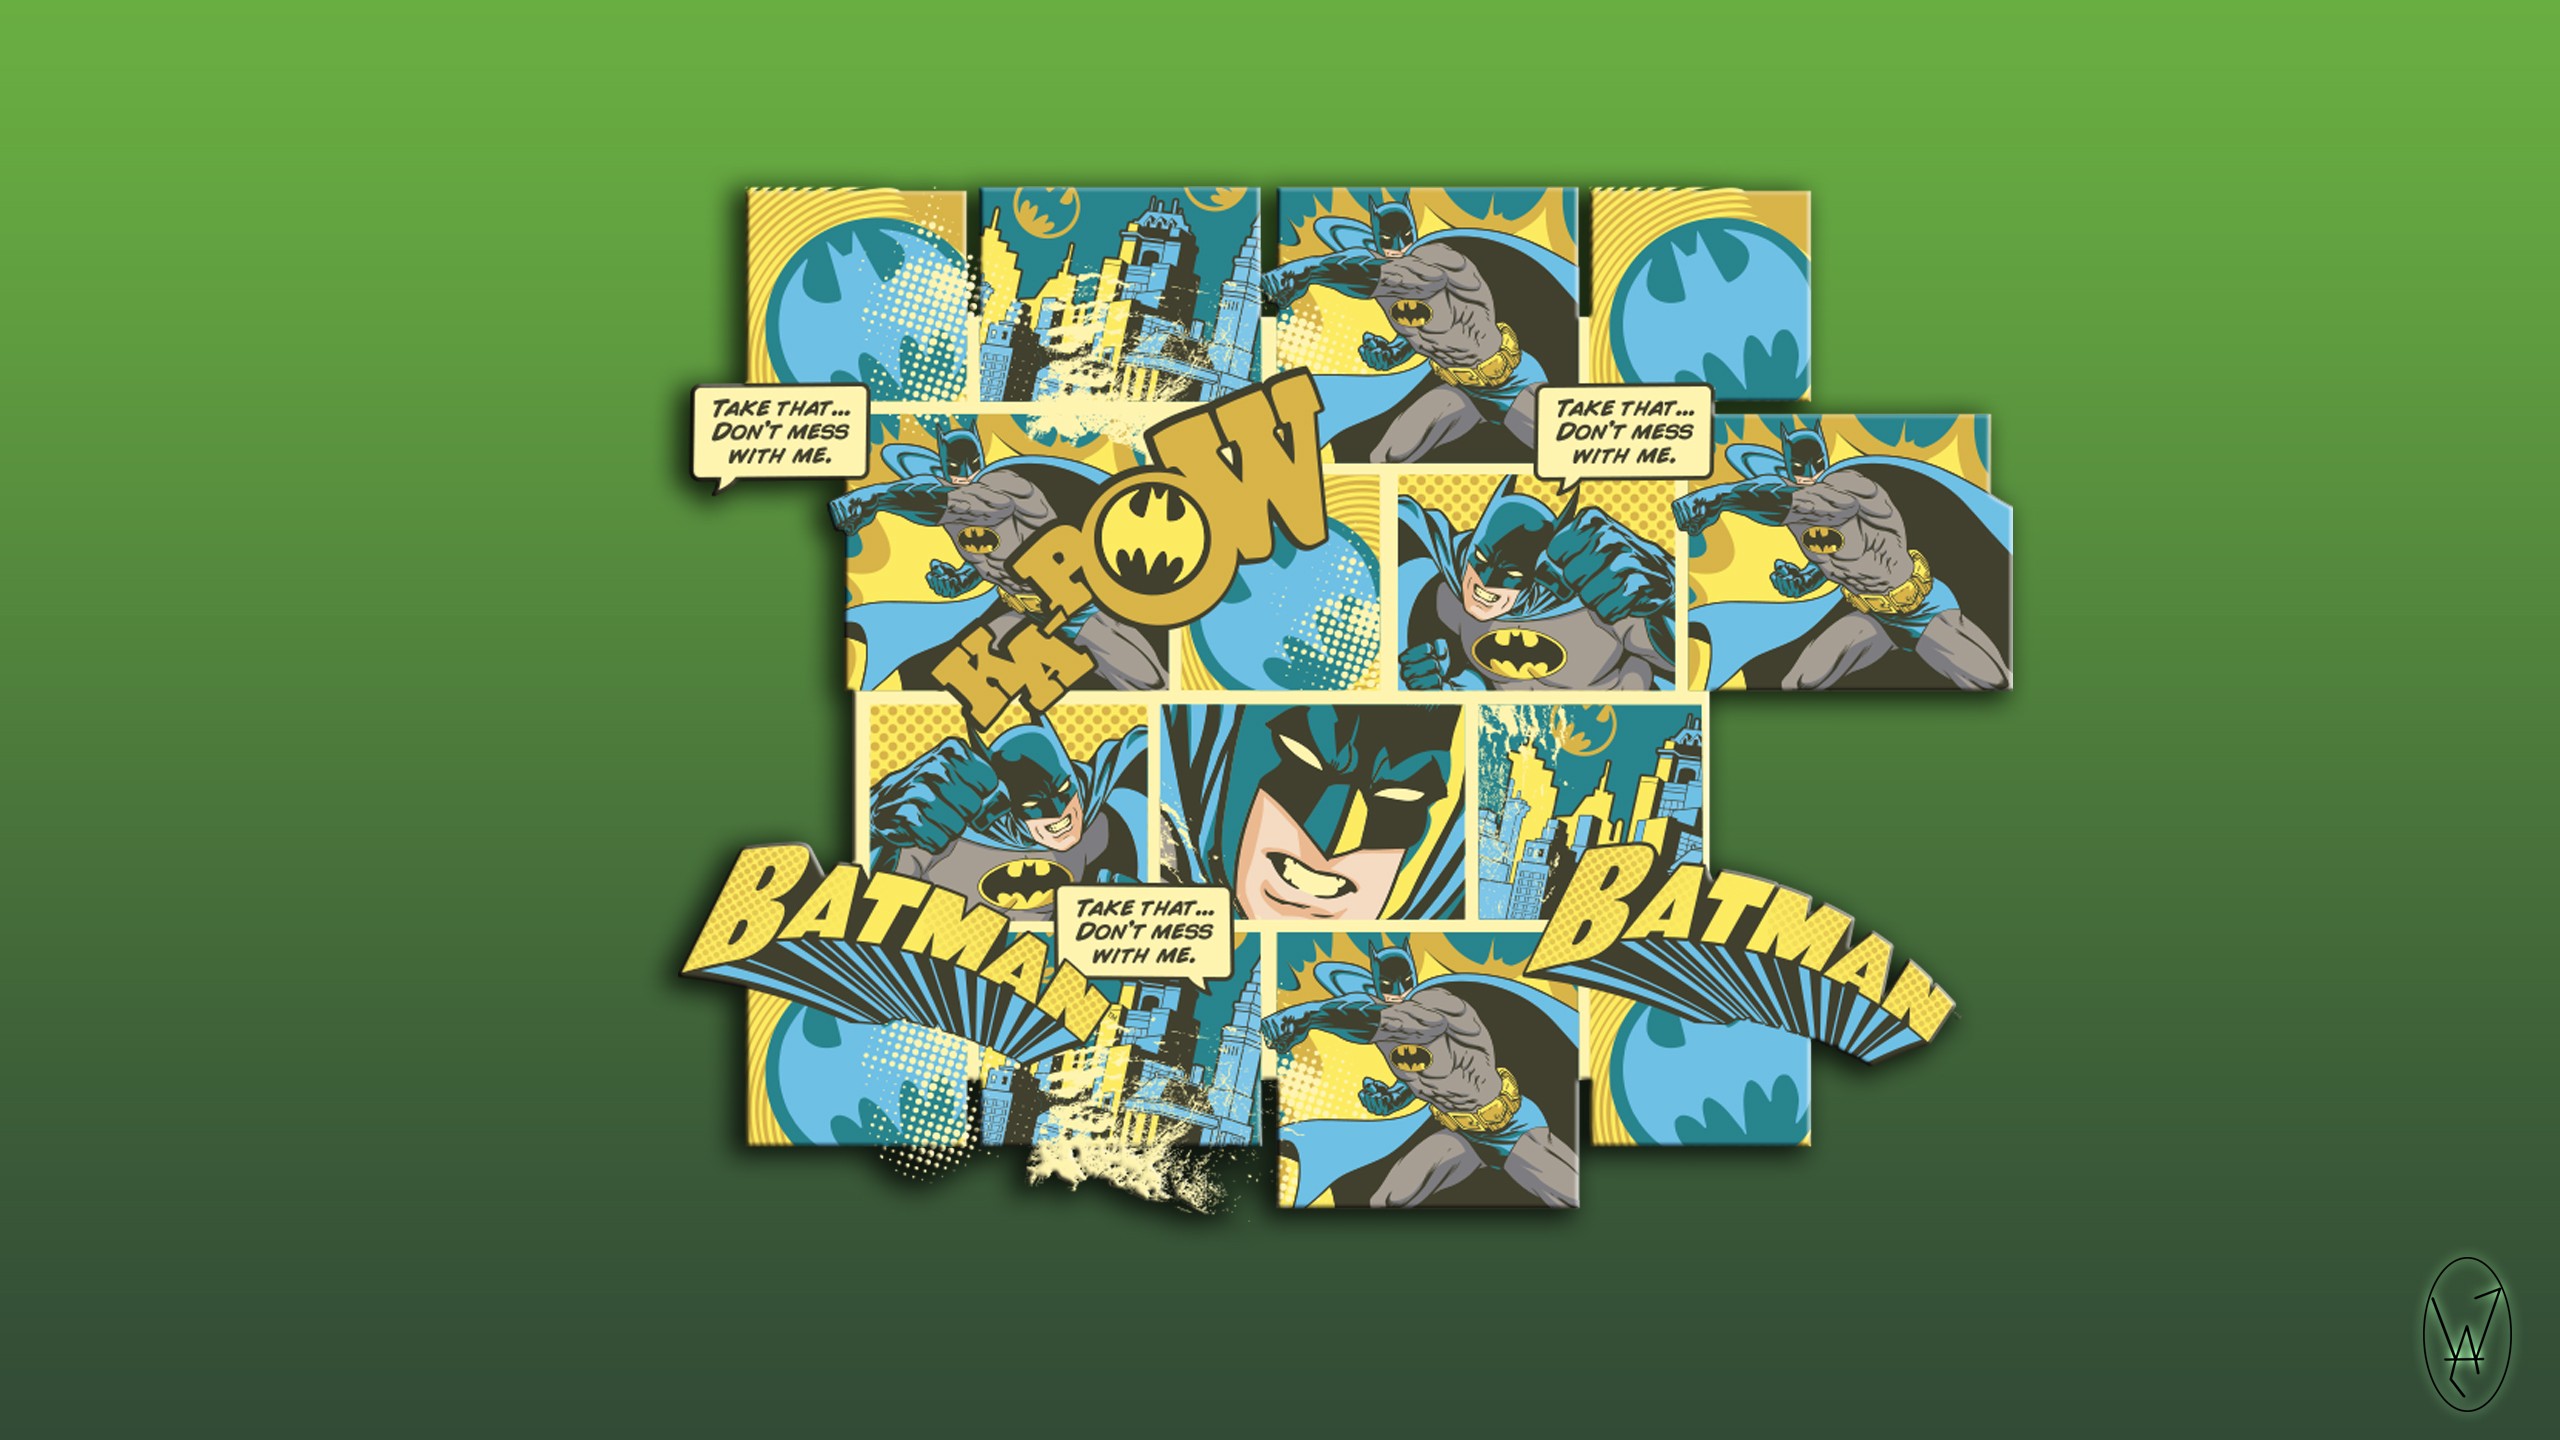 General 2560x1440 Batman sketches logo comics green background simple background